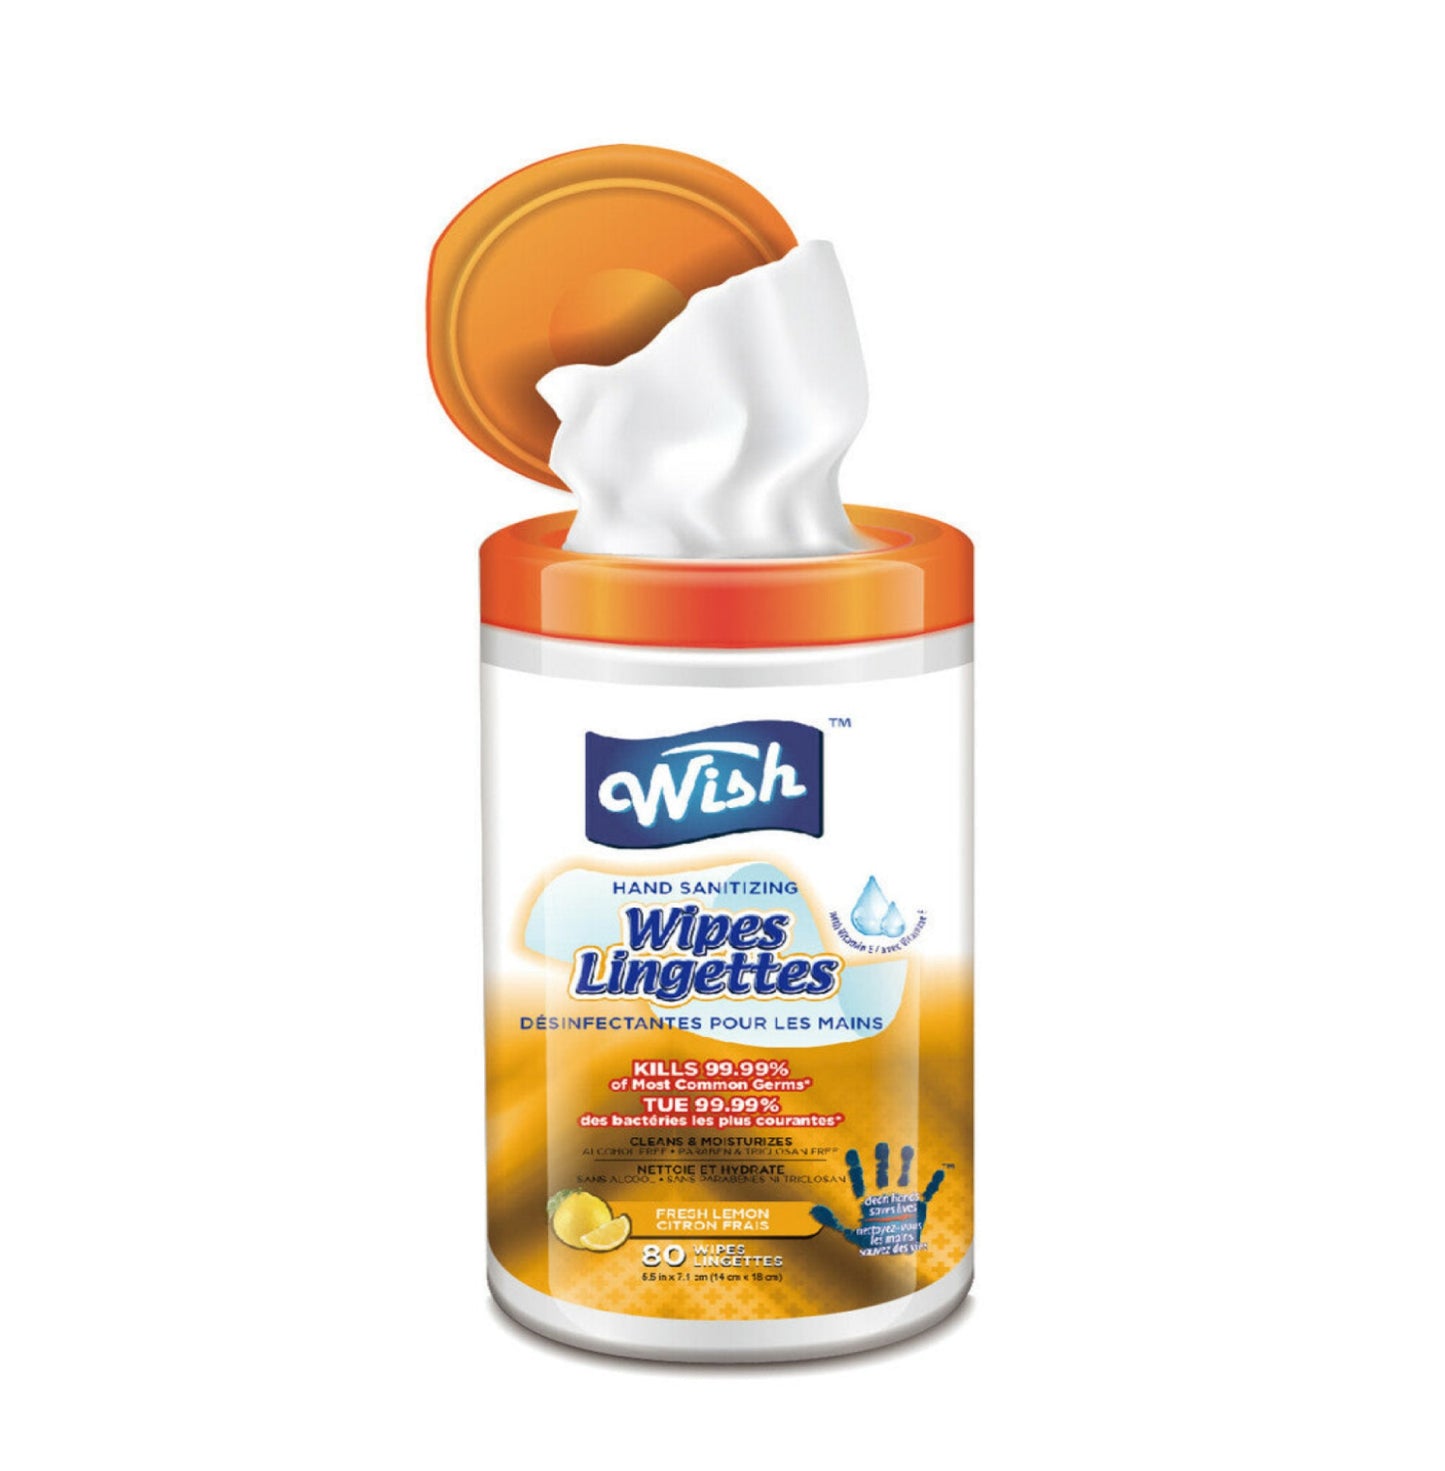 Wish Hand Sanitizer Wipes Lingettes (Cylinder Size) (80 ct) - Lemon